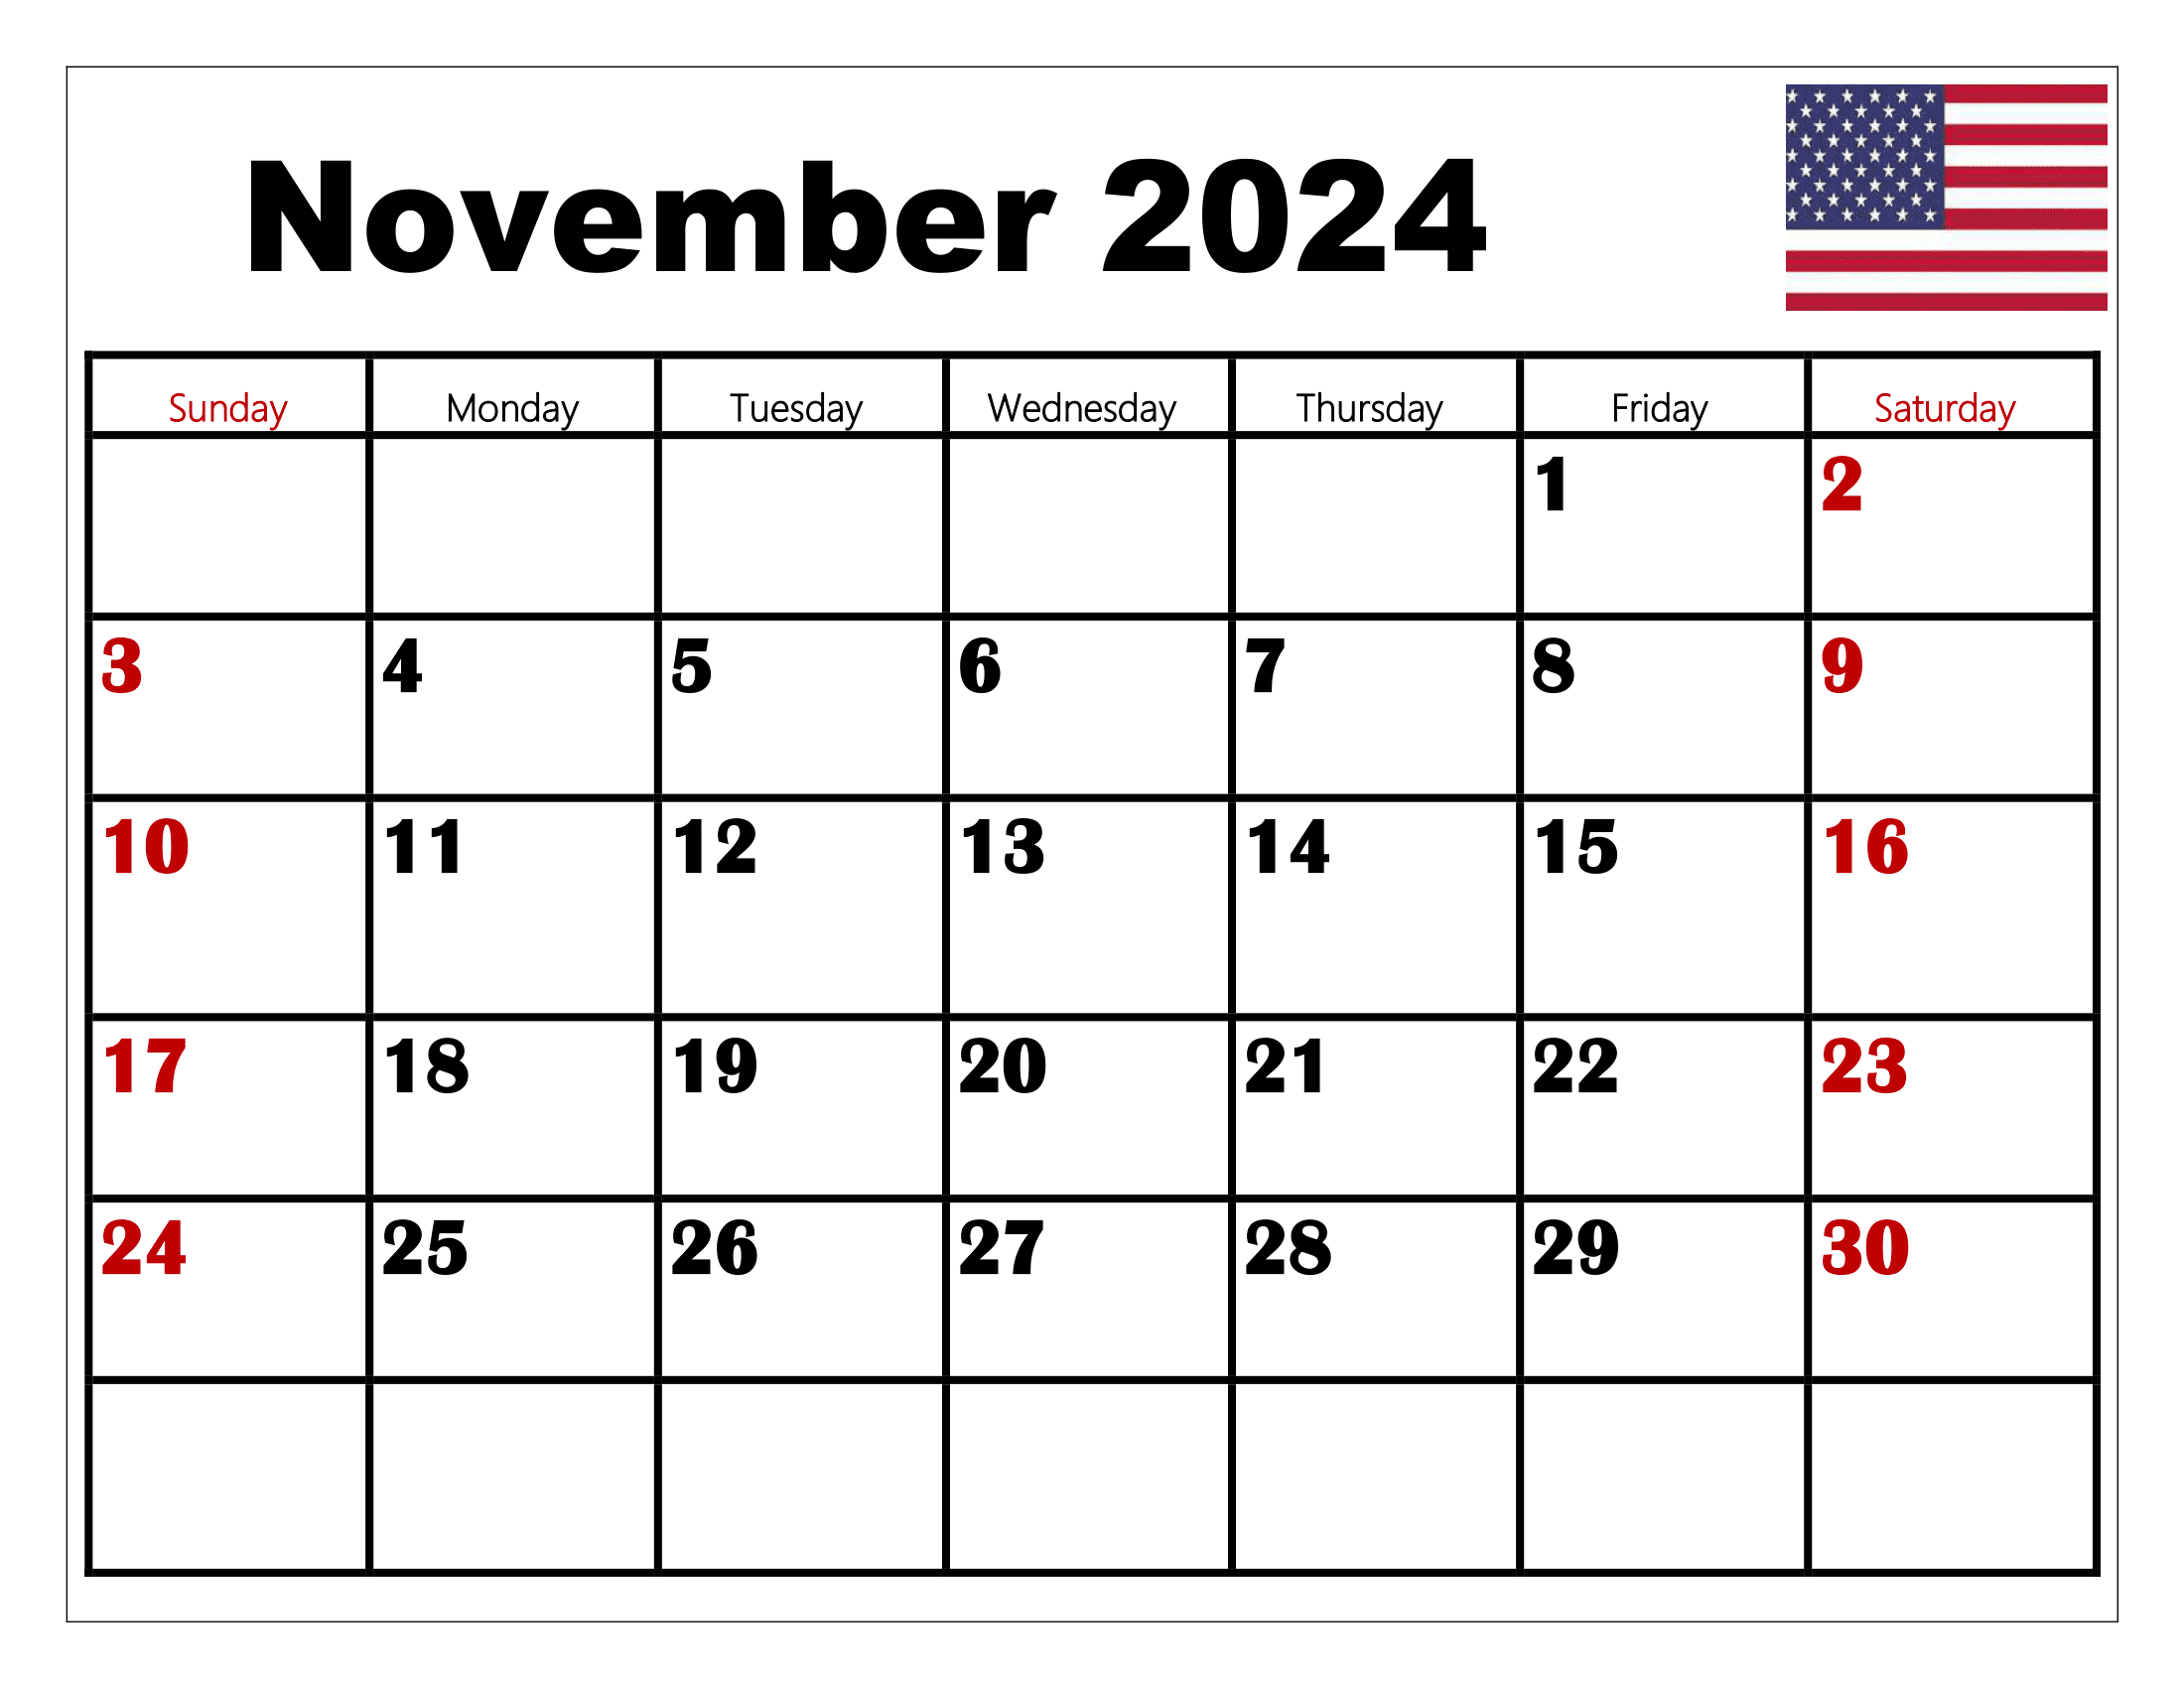 November 2024 Calendar Printable Pdf Template With Holidays for Calendar November 2024 Printable